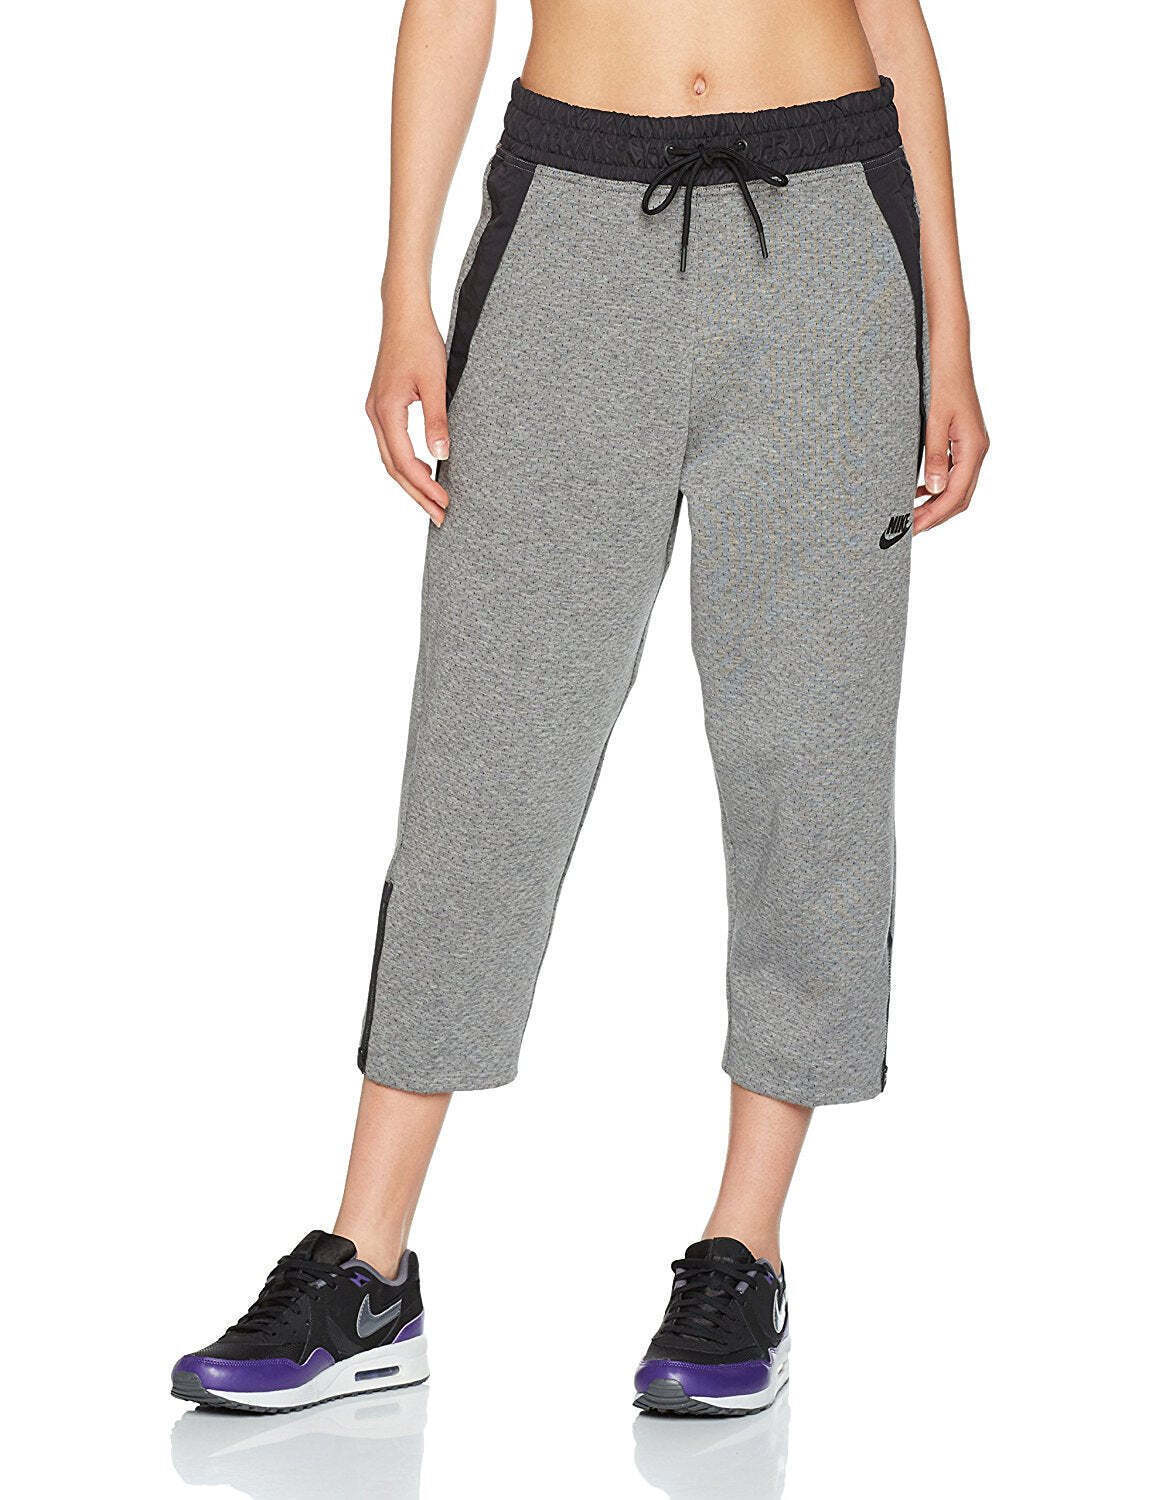 Primary image for Nike Womens Tech Fleece Sneaker Pants,Grey,X-Small